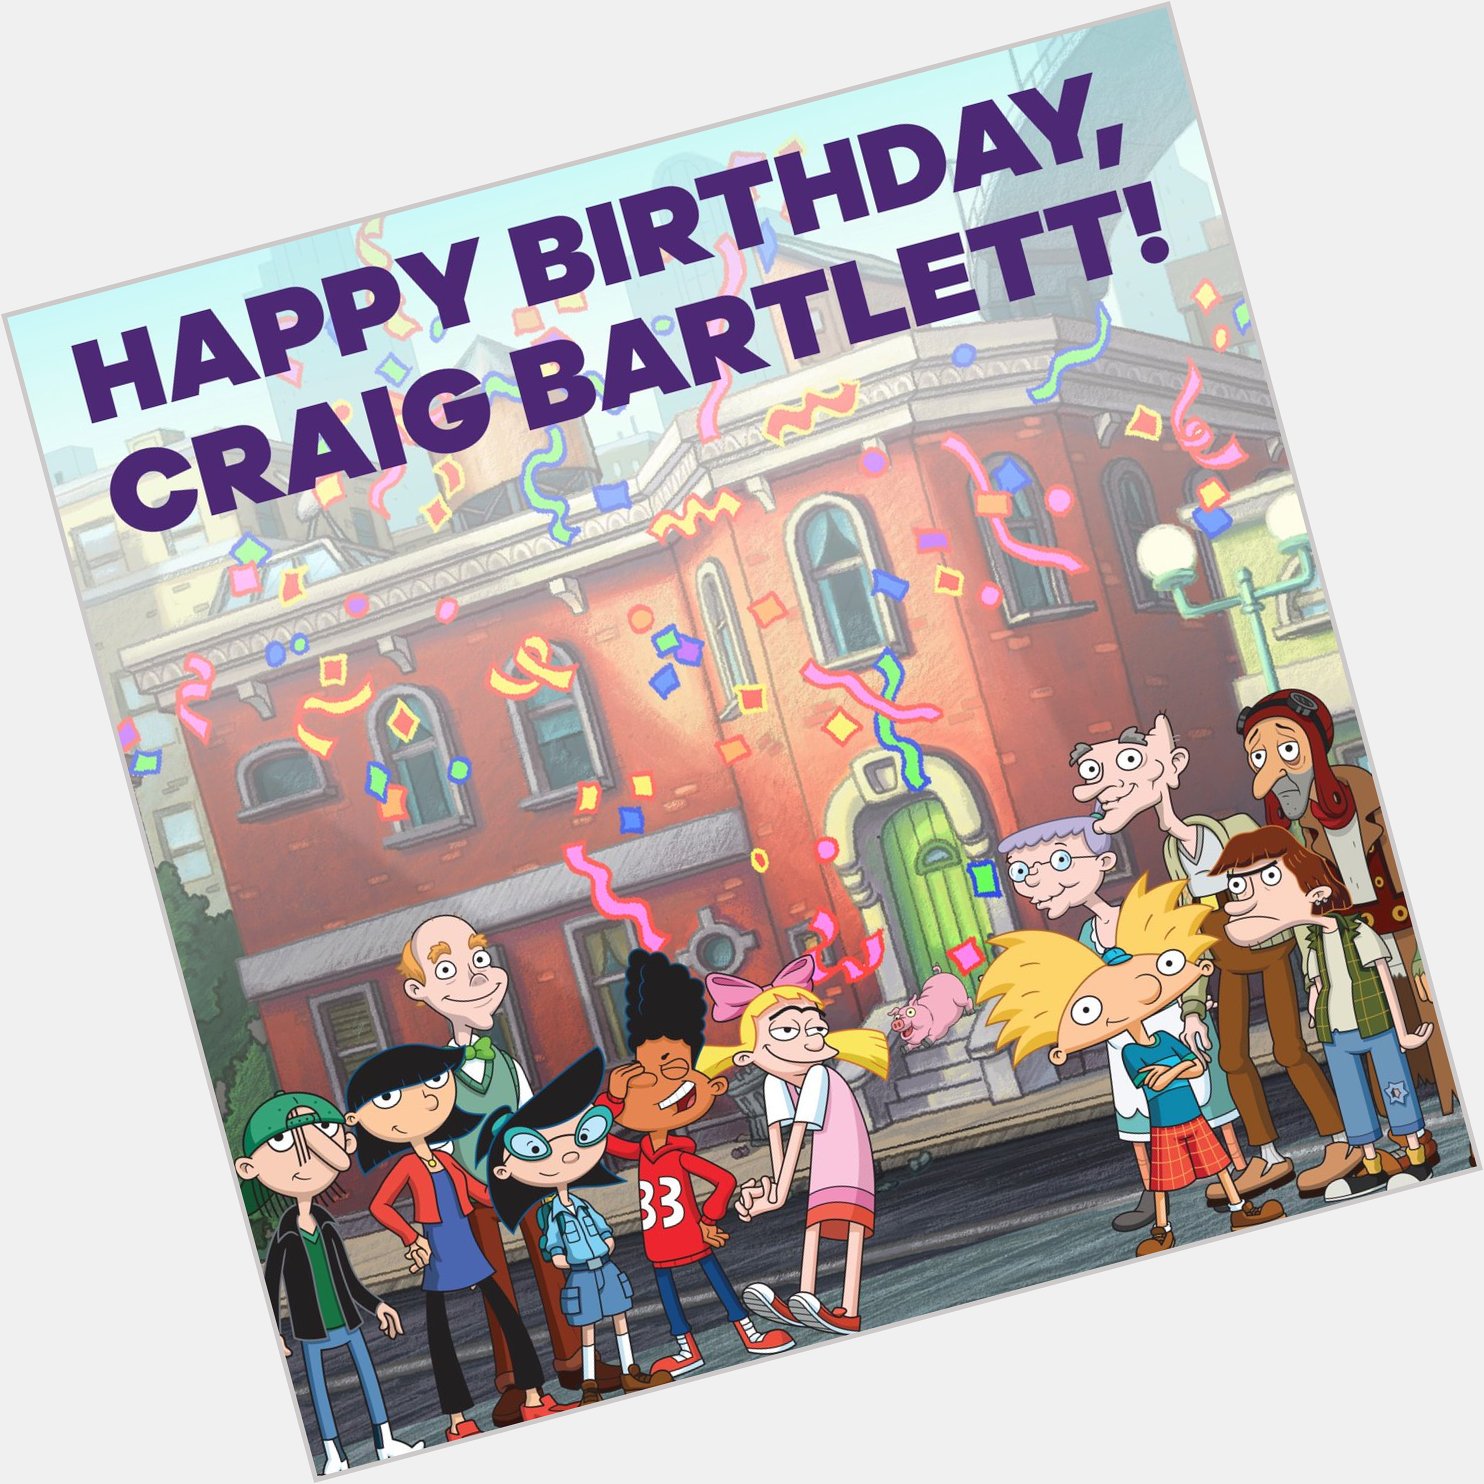 Happy birthday to legendary Hey Arnold! creator Craig Bartlett!   